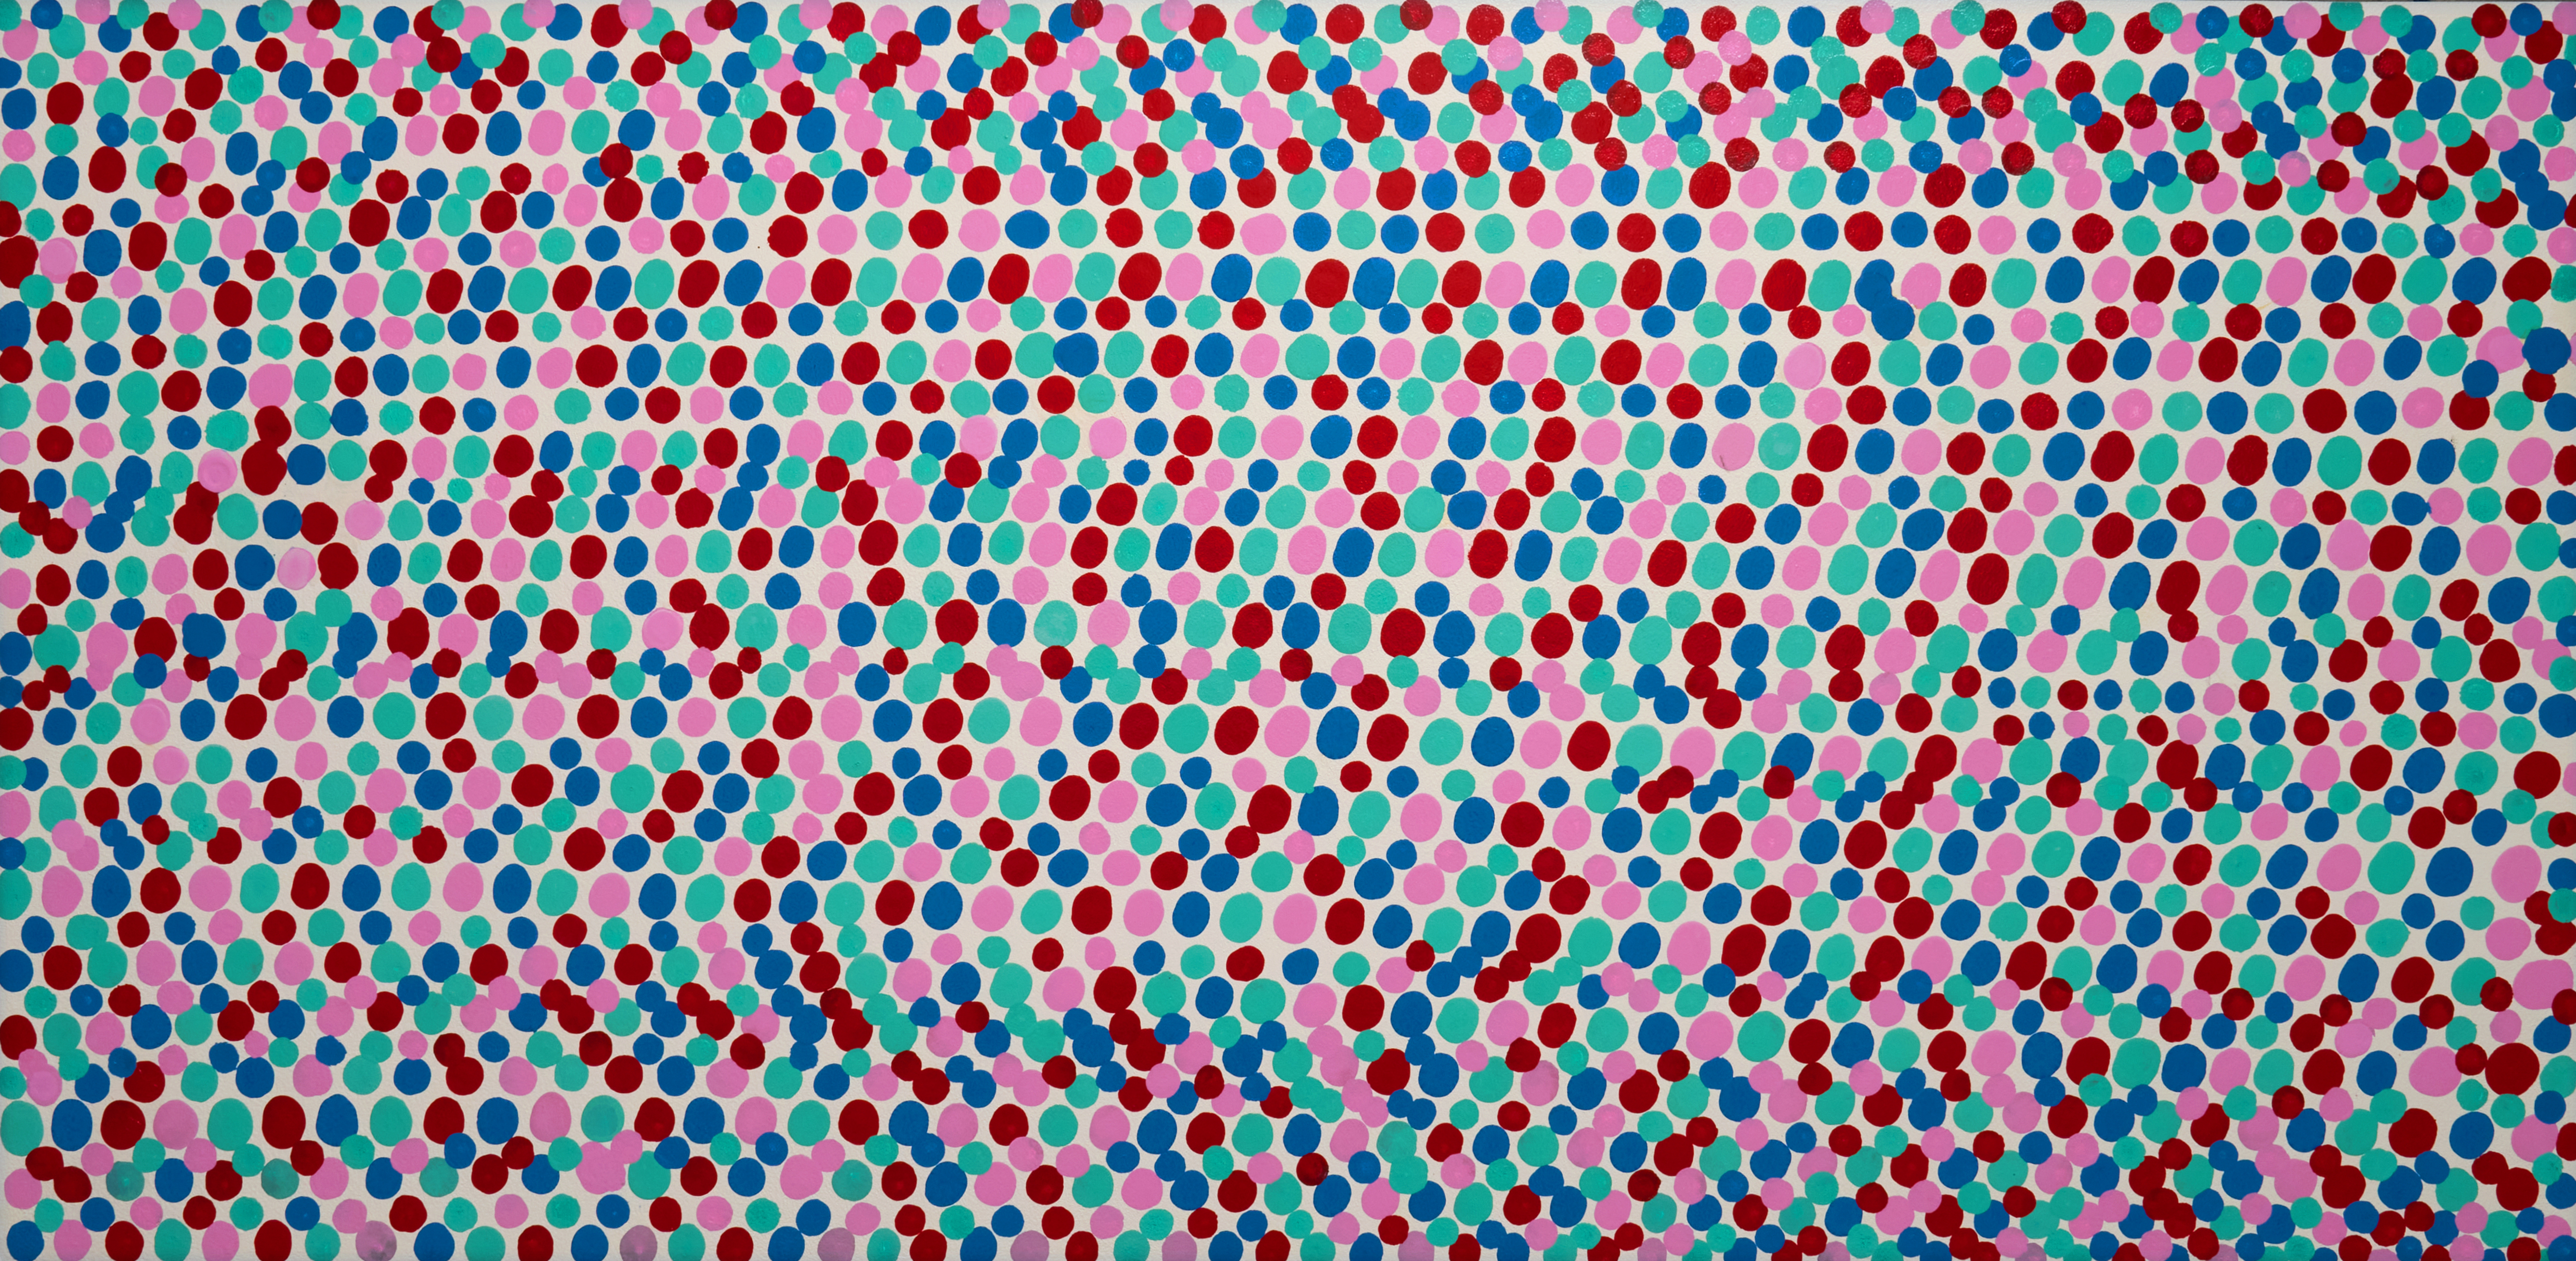 Nolan Cooley, Dots, 2019. Acrylic on wood, 24" x 48".